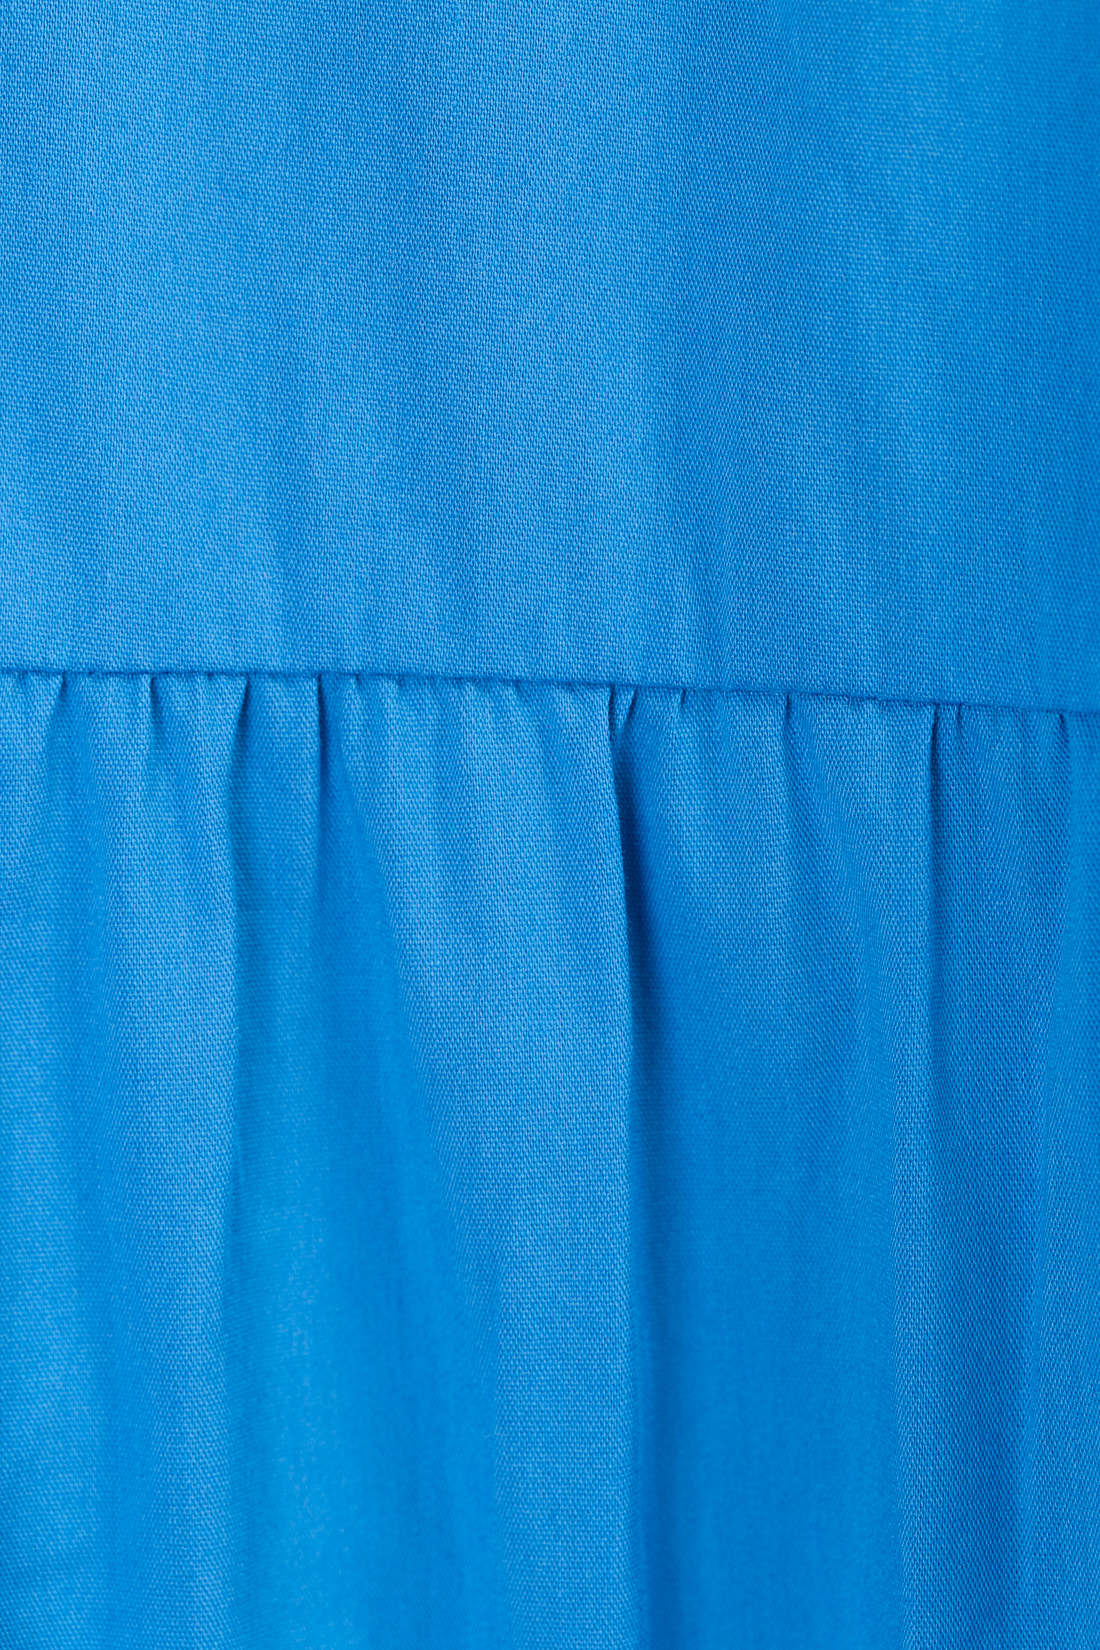 Юбка в цыганском стиле (арт. baon B477026), размер XXL, цвет синий Юбка в цыганском стиле (арт. baon B477026) - фото 4